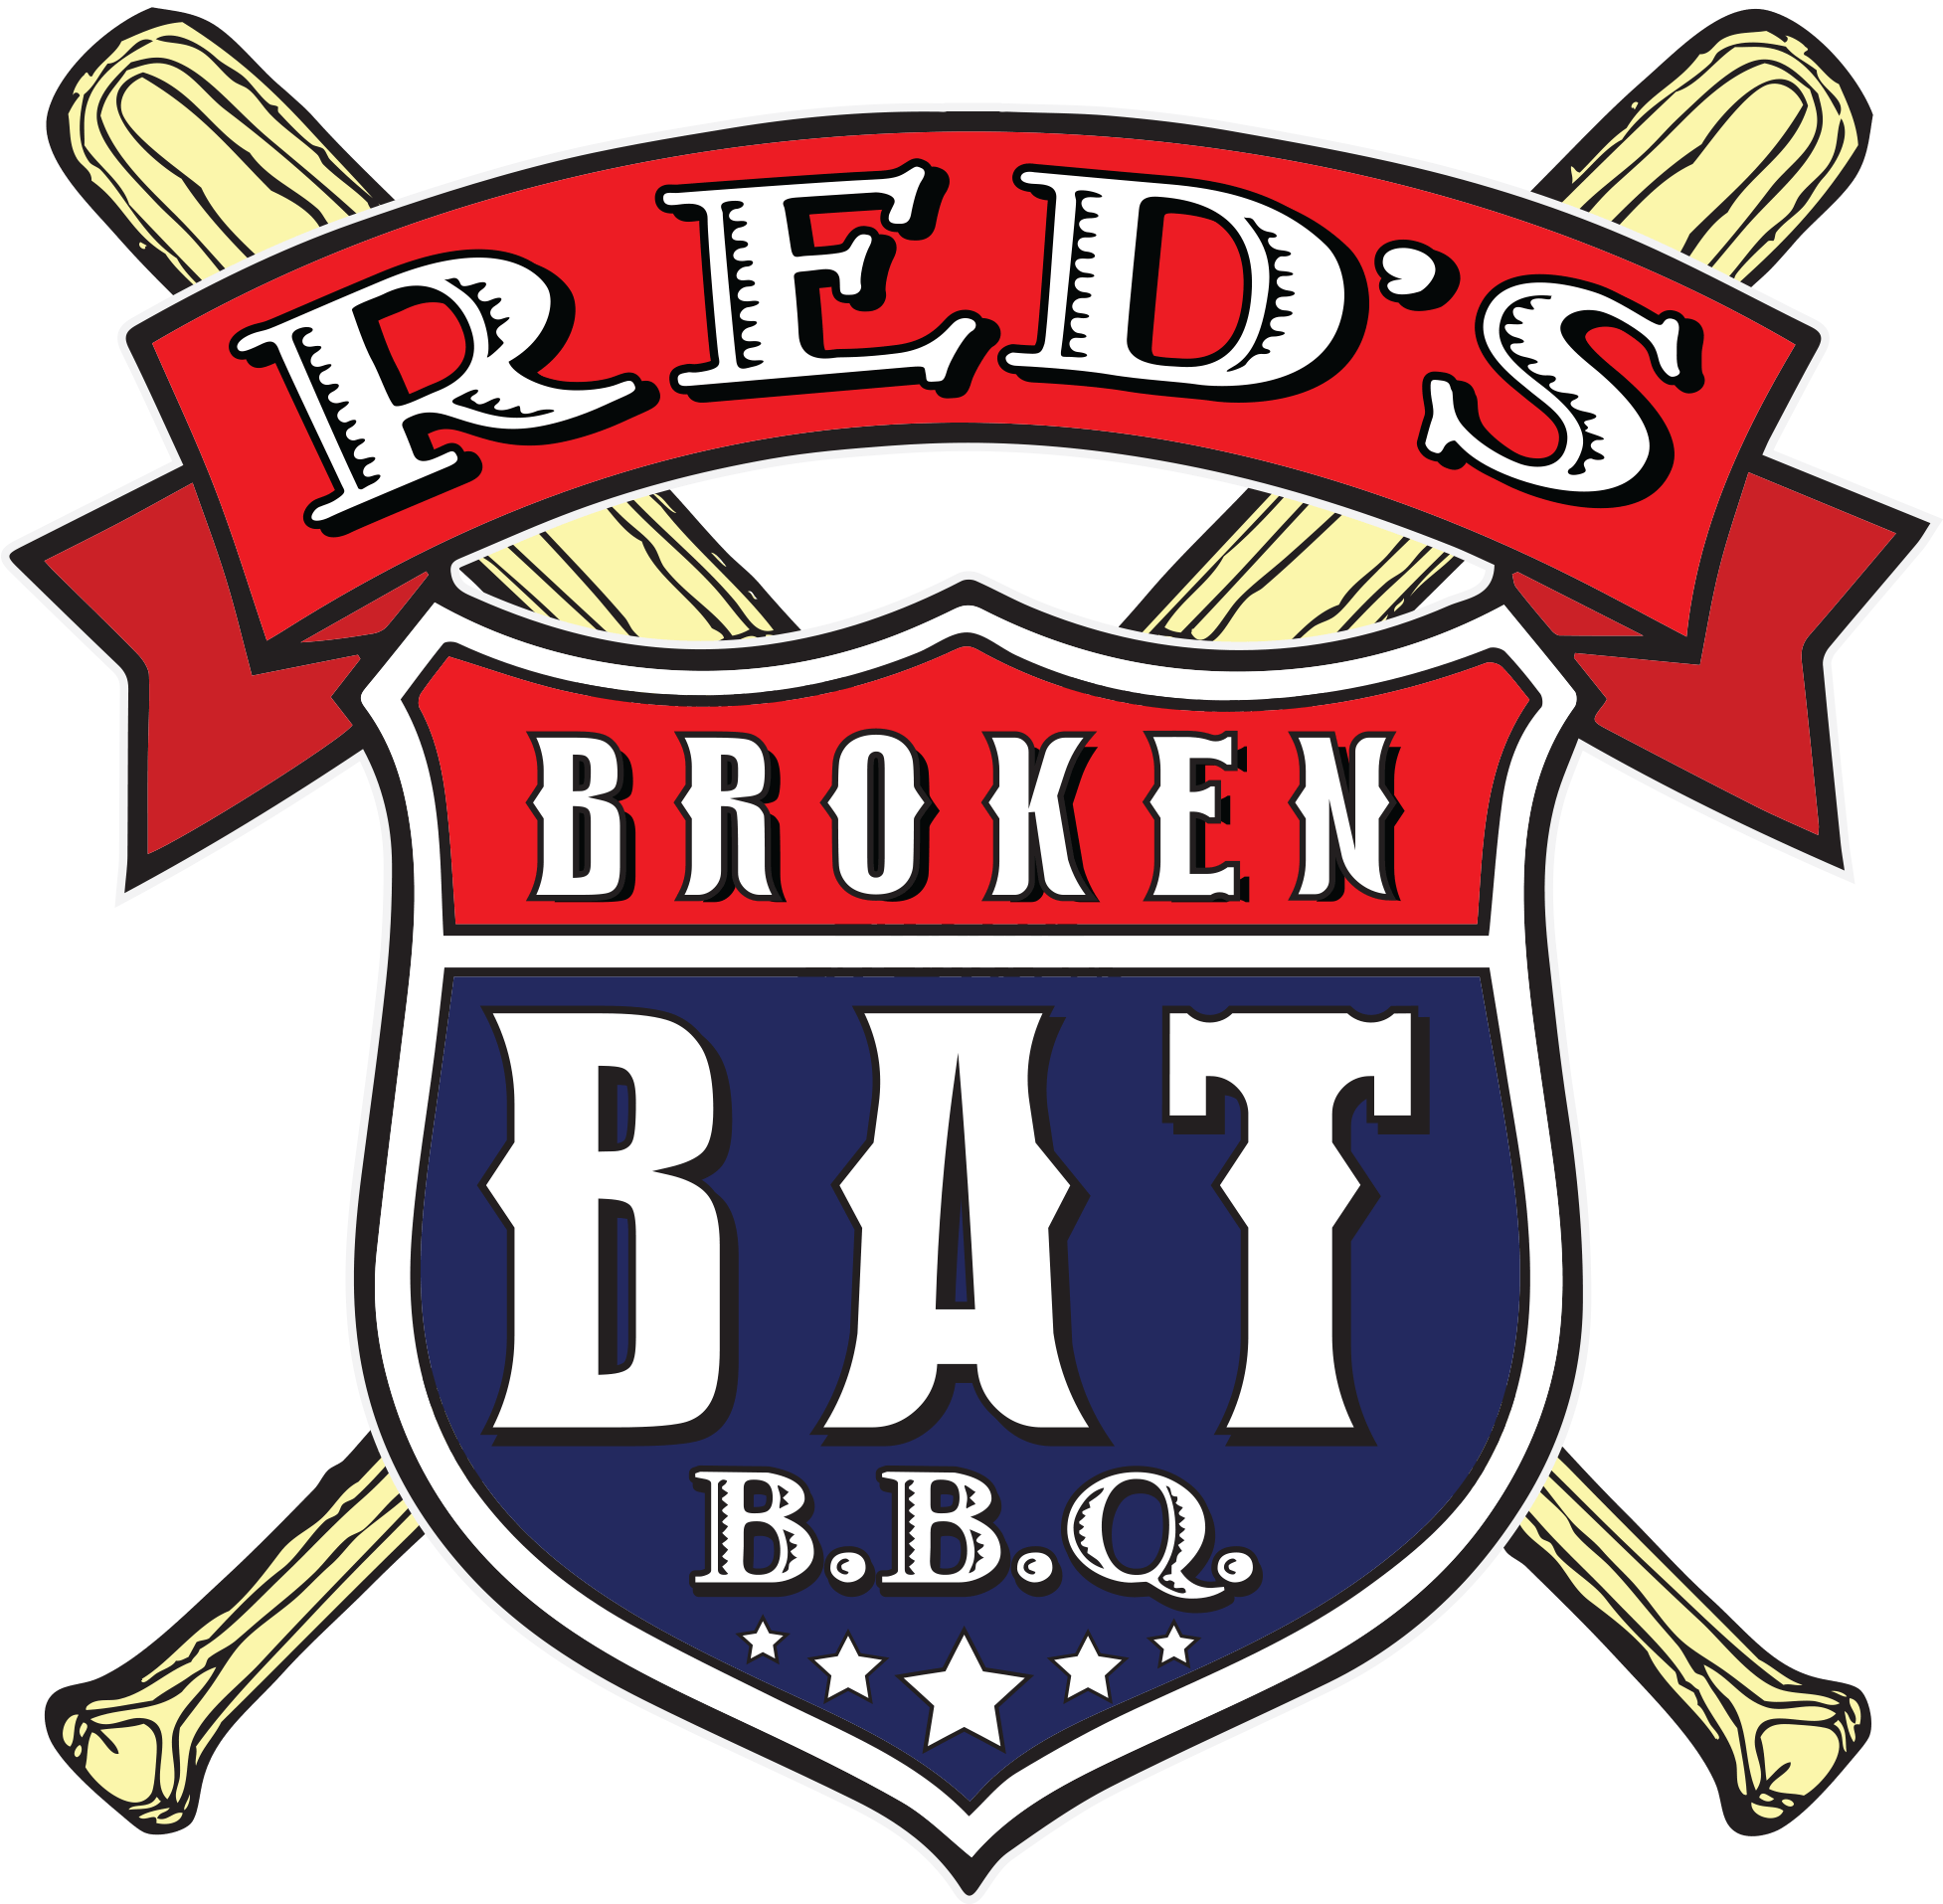 Red Bat Logo - Red's Broken Bat B.B.Q